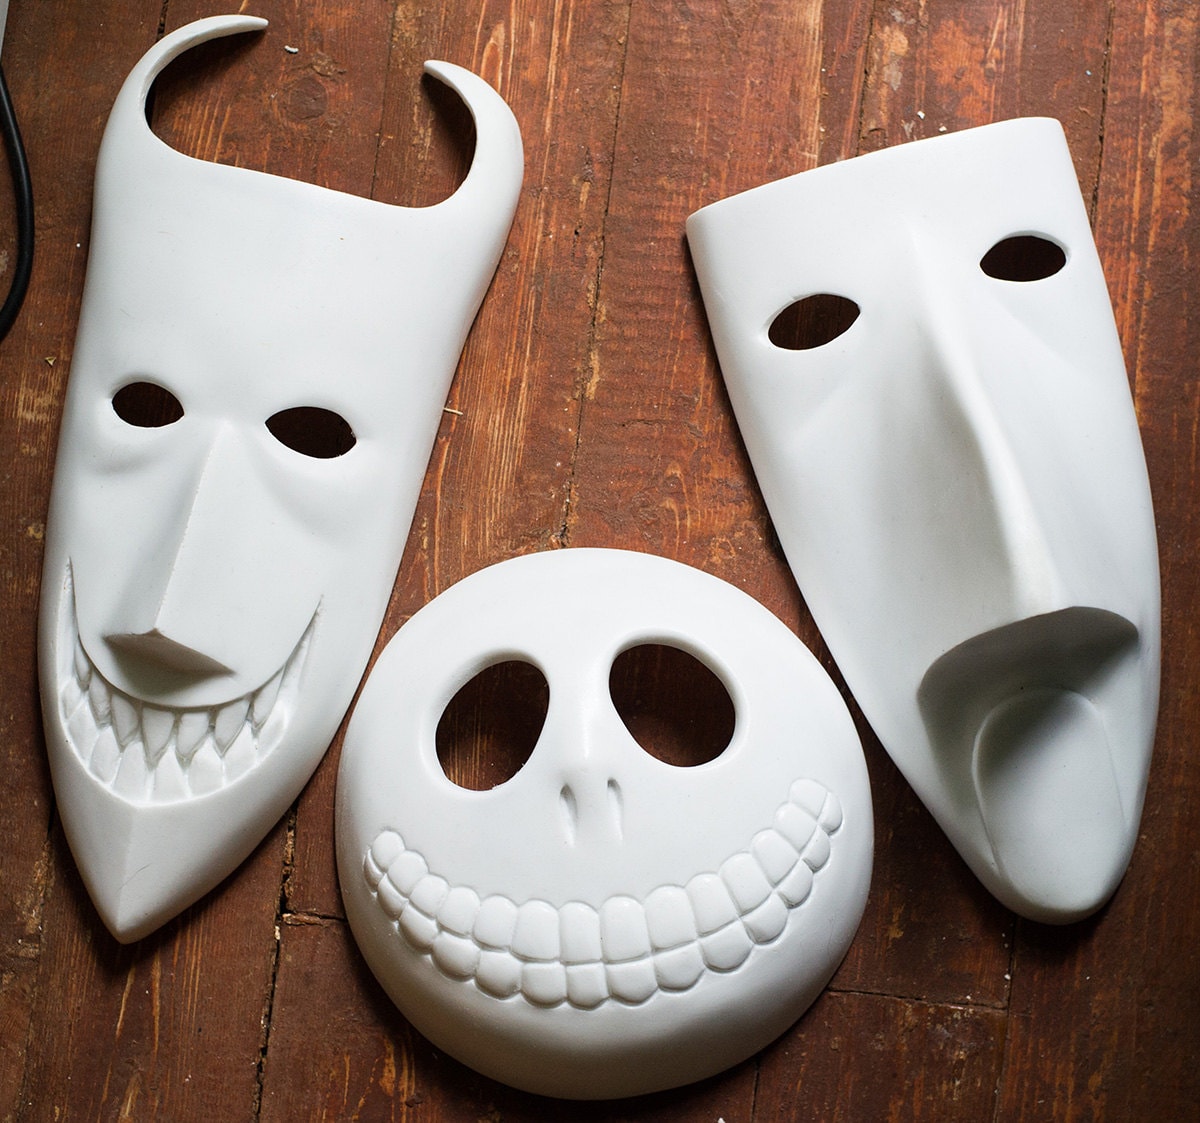 inspired Lock Shock Barrel masks UNPAINTED by Maskforsale on Etsy